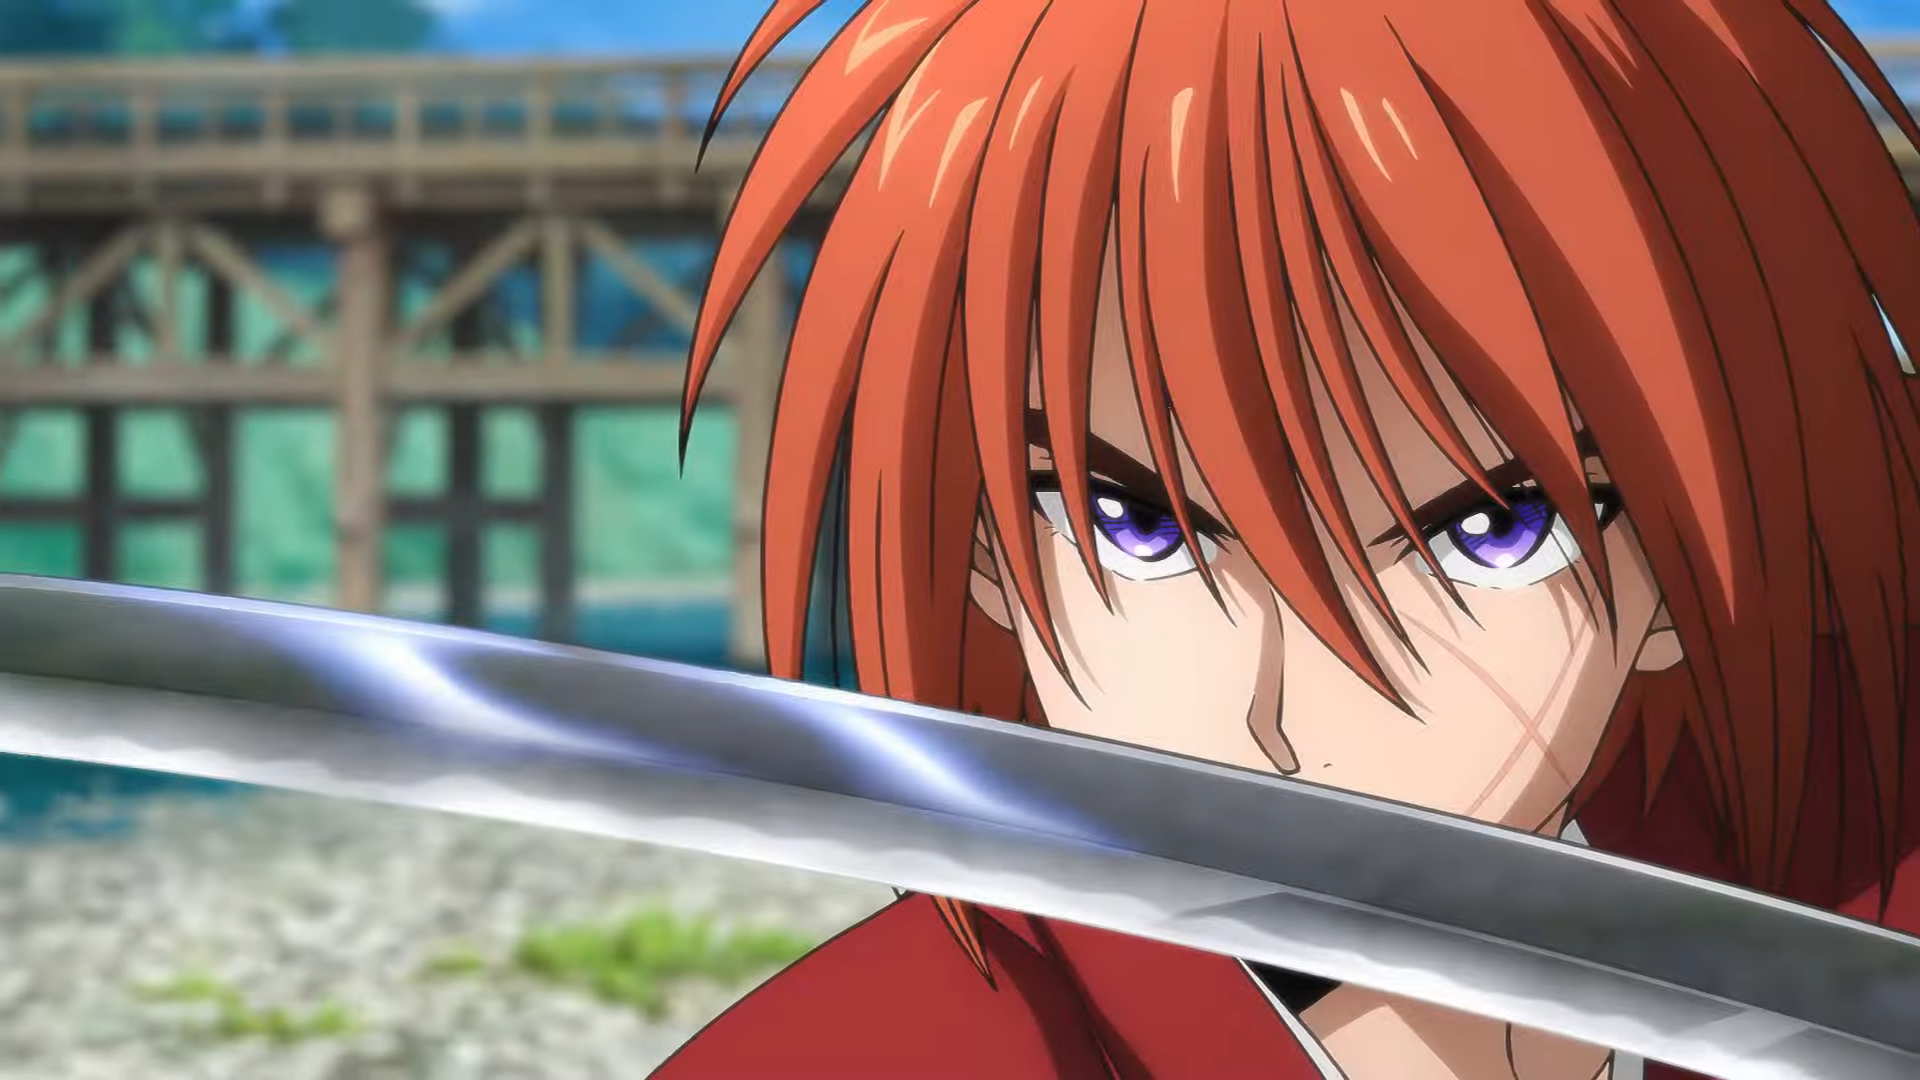 Rurouni Kenshin 2023 Reveals New Trailer, Cast Additions - Anime